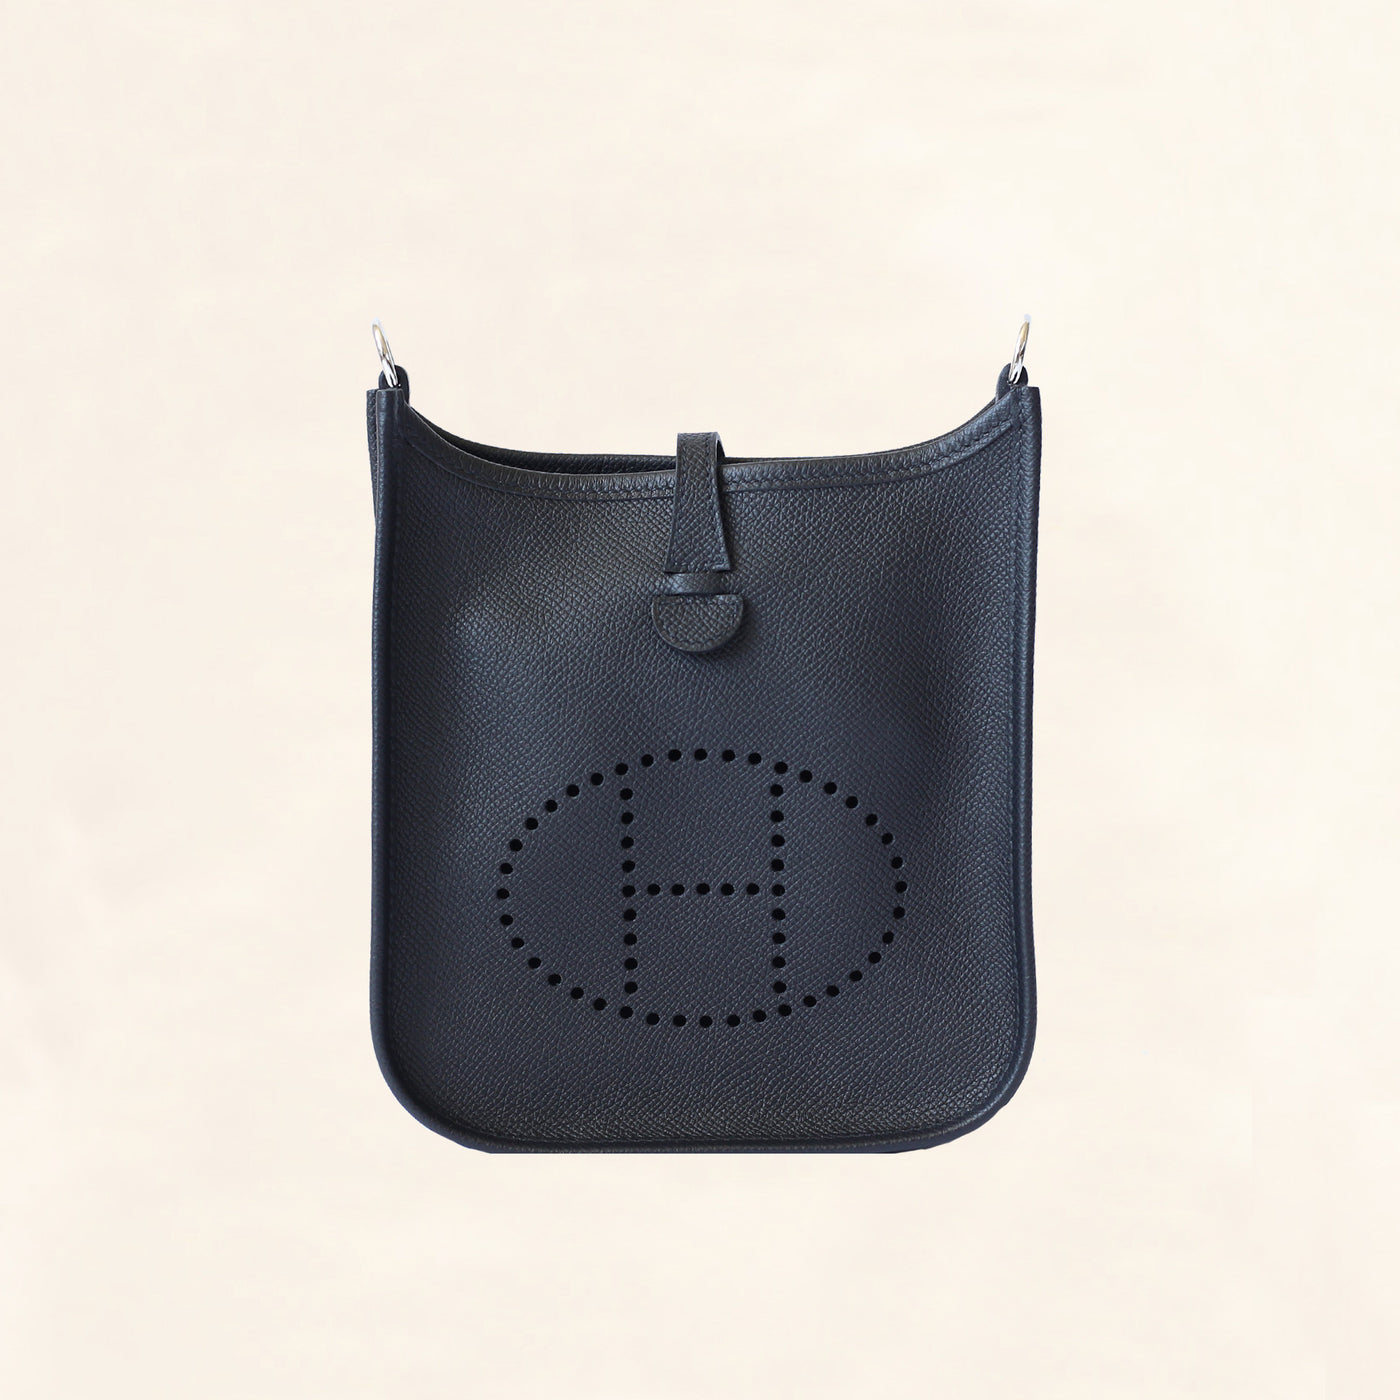 Pochette Métis Monogram Empreinte Leather - Handbags M41487